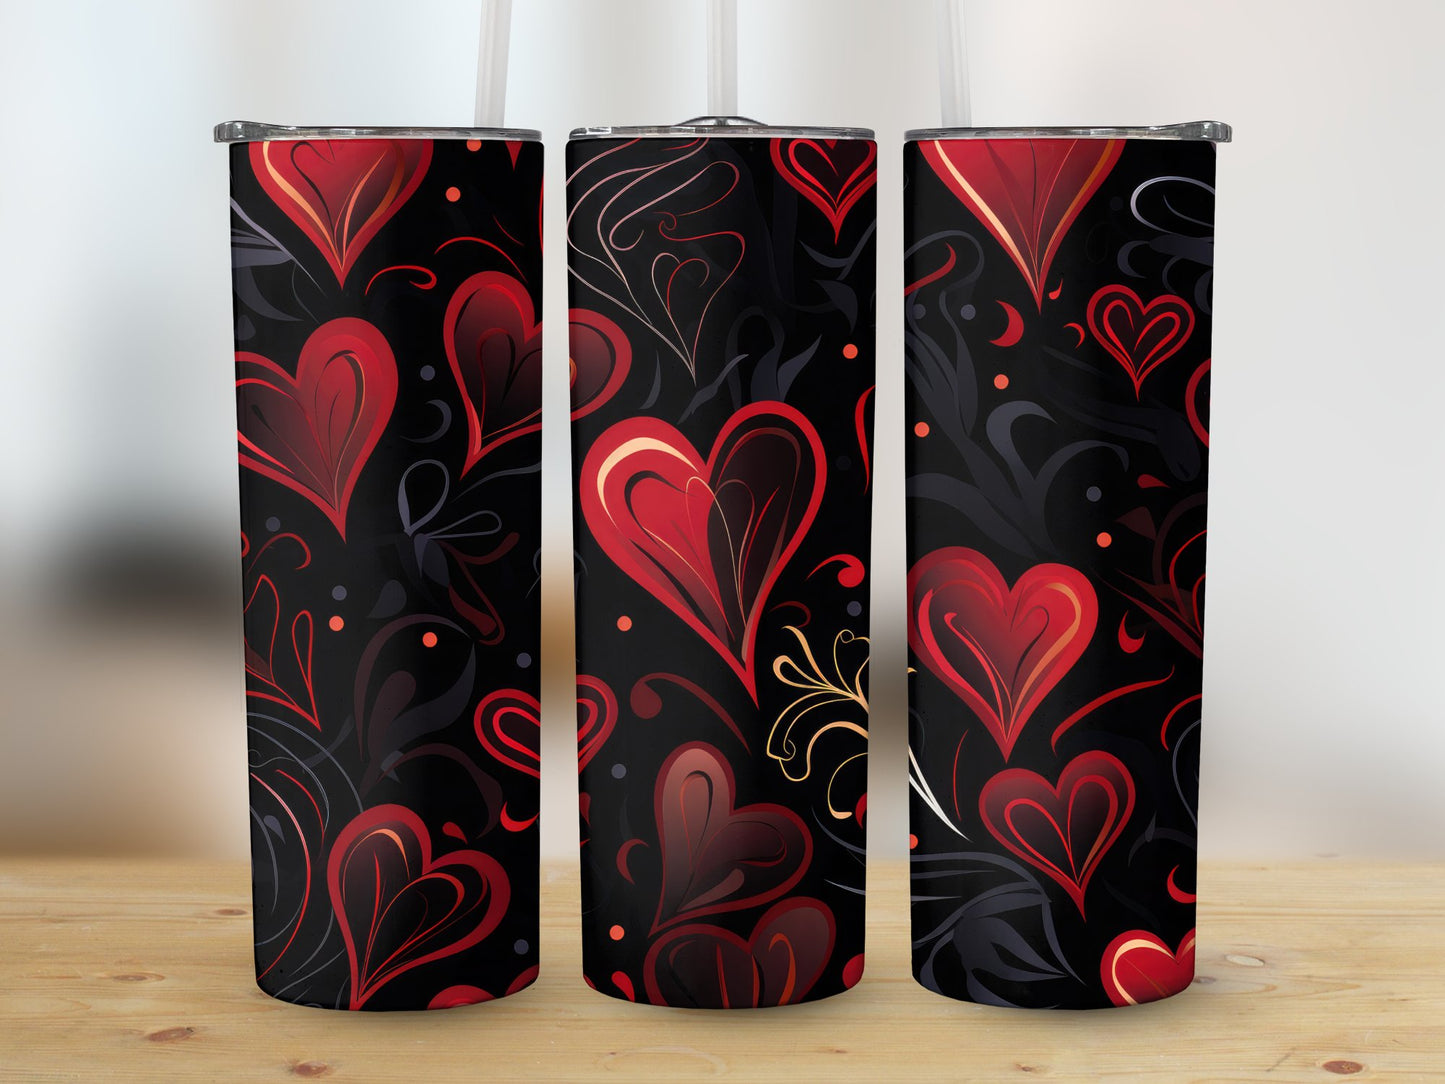 Red Black Hearts (Valentine Tumbler)